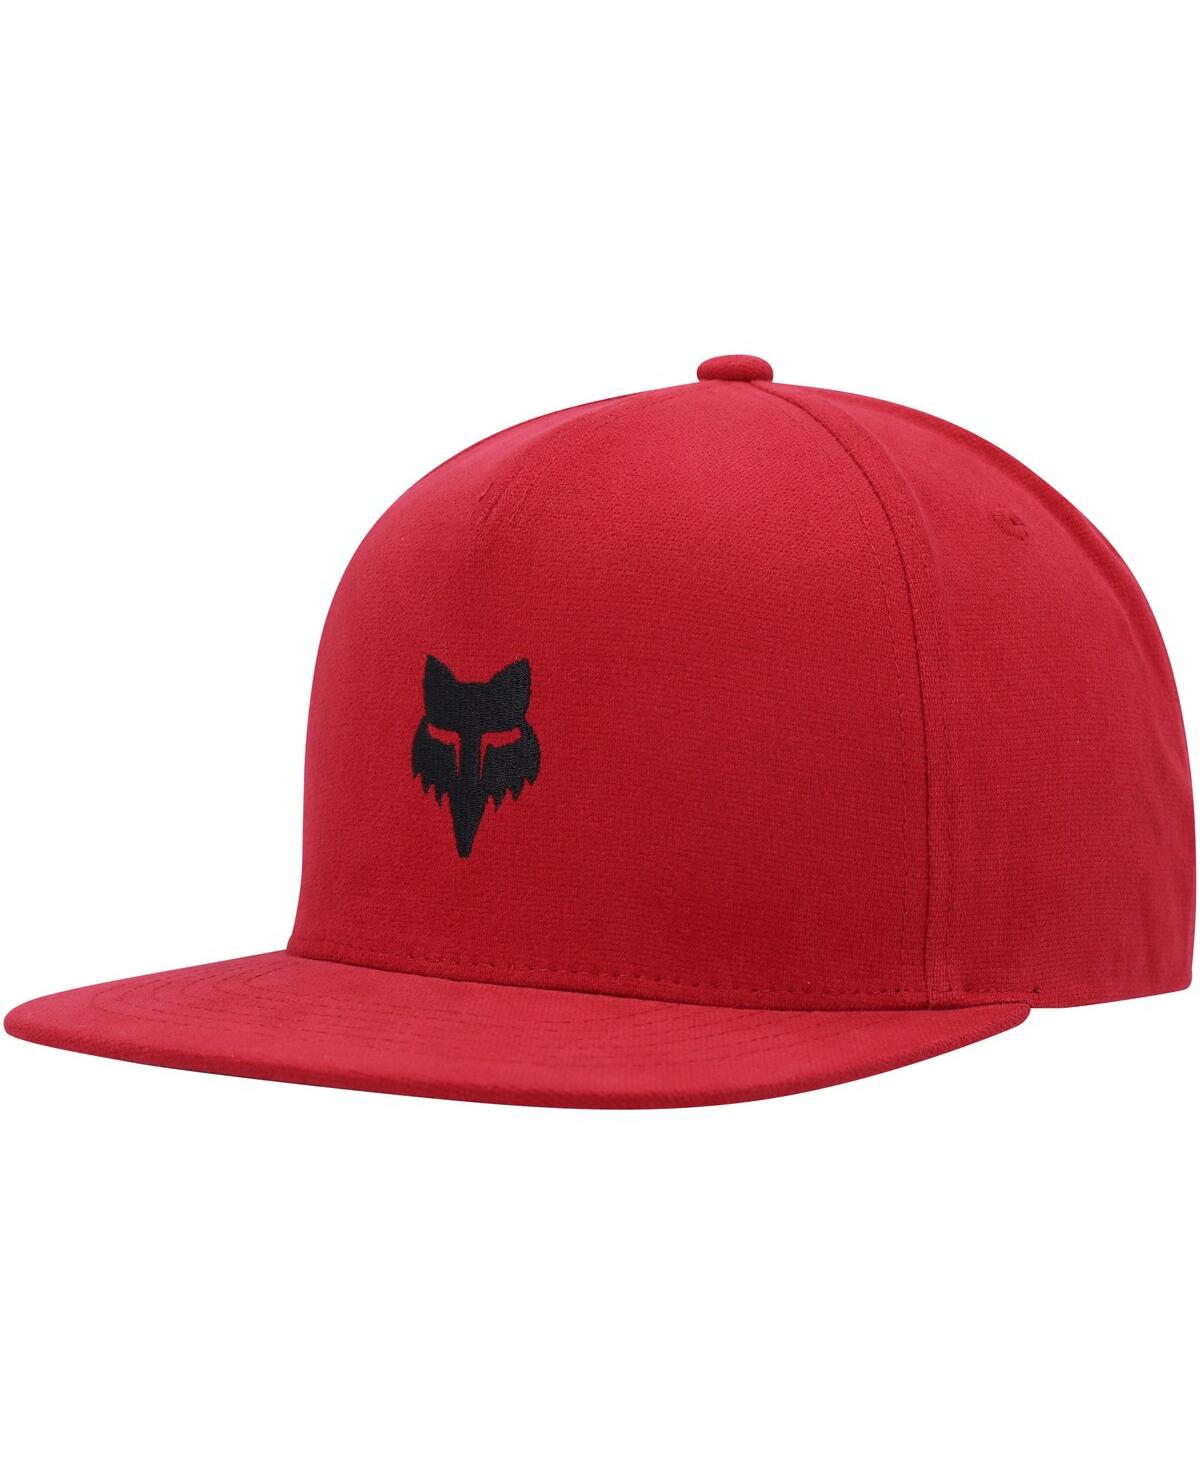 Men's Fox Red Snapback Hat - Red